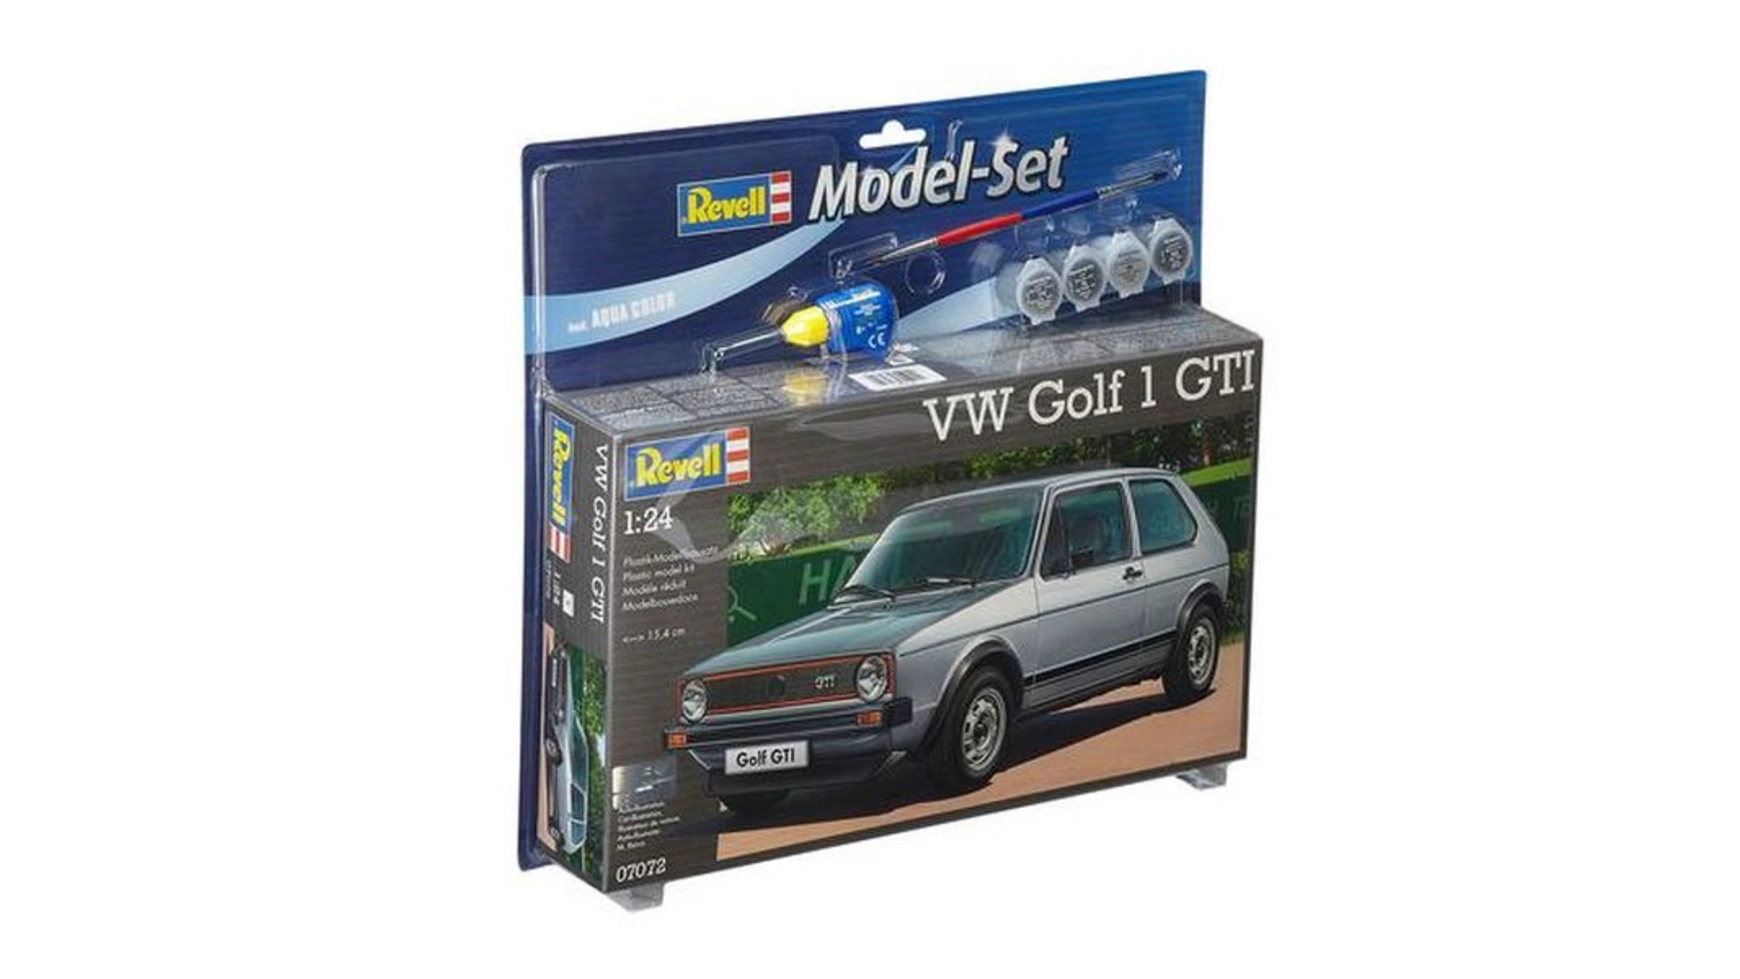 Revell Набор моделей VW Golf 1 GTI набор инструментов синхронизации vag для ea211 vw golf 7 mk7 vii jetta 1 2 1 4 tsi бензиновый двигатель tgi 8 шт